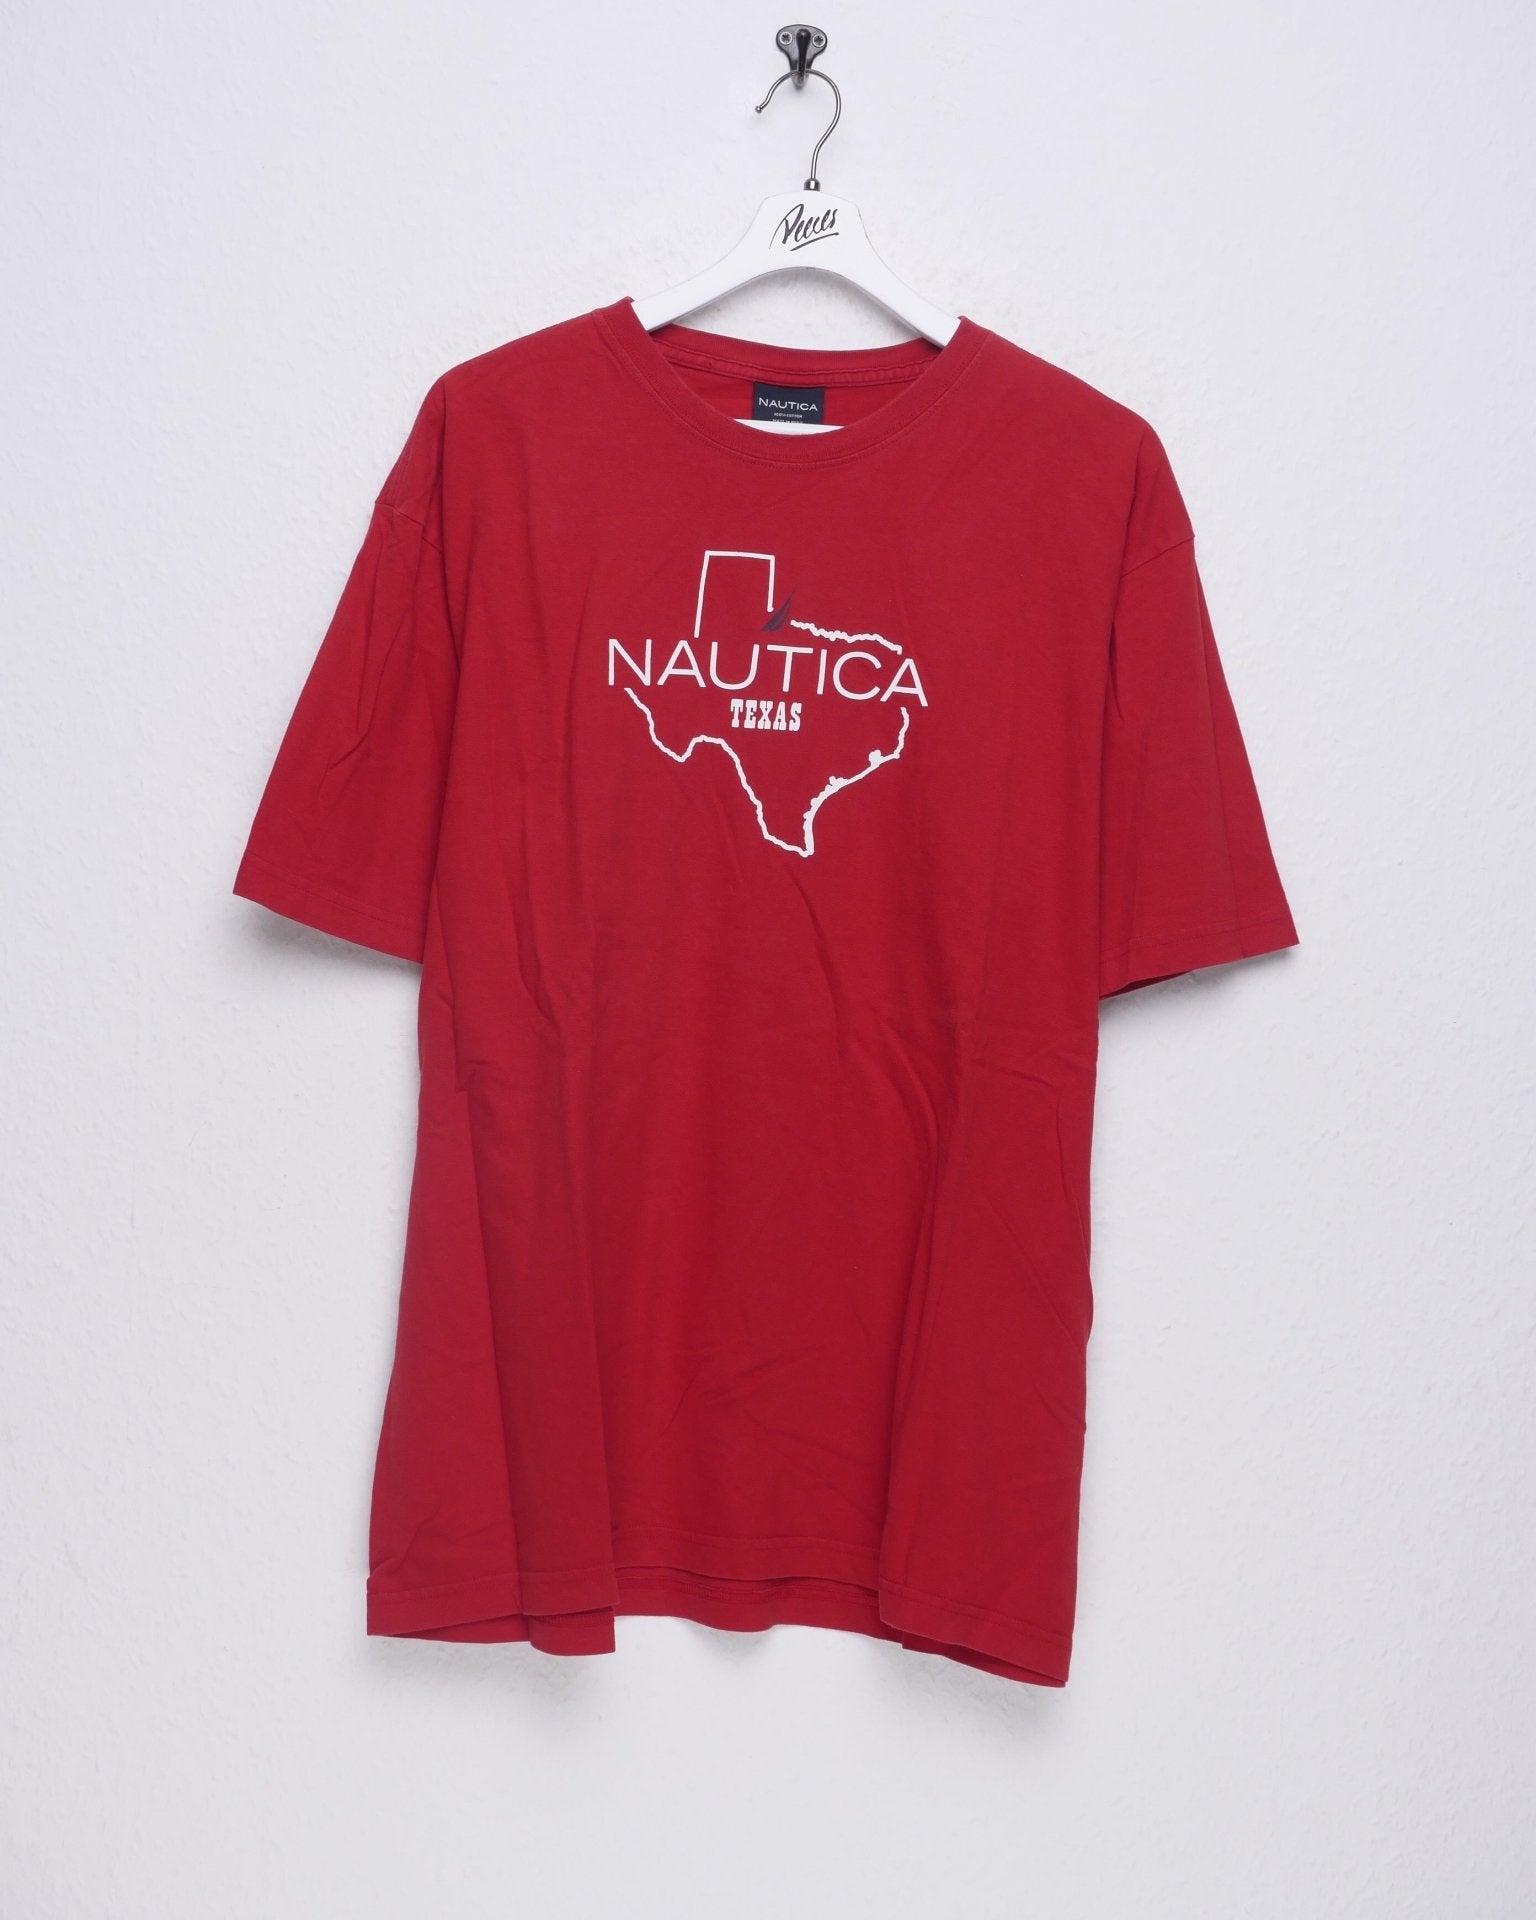 Nautica printed Texas Graphic Vintage Shirt - Peeces